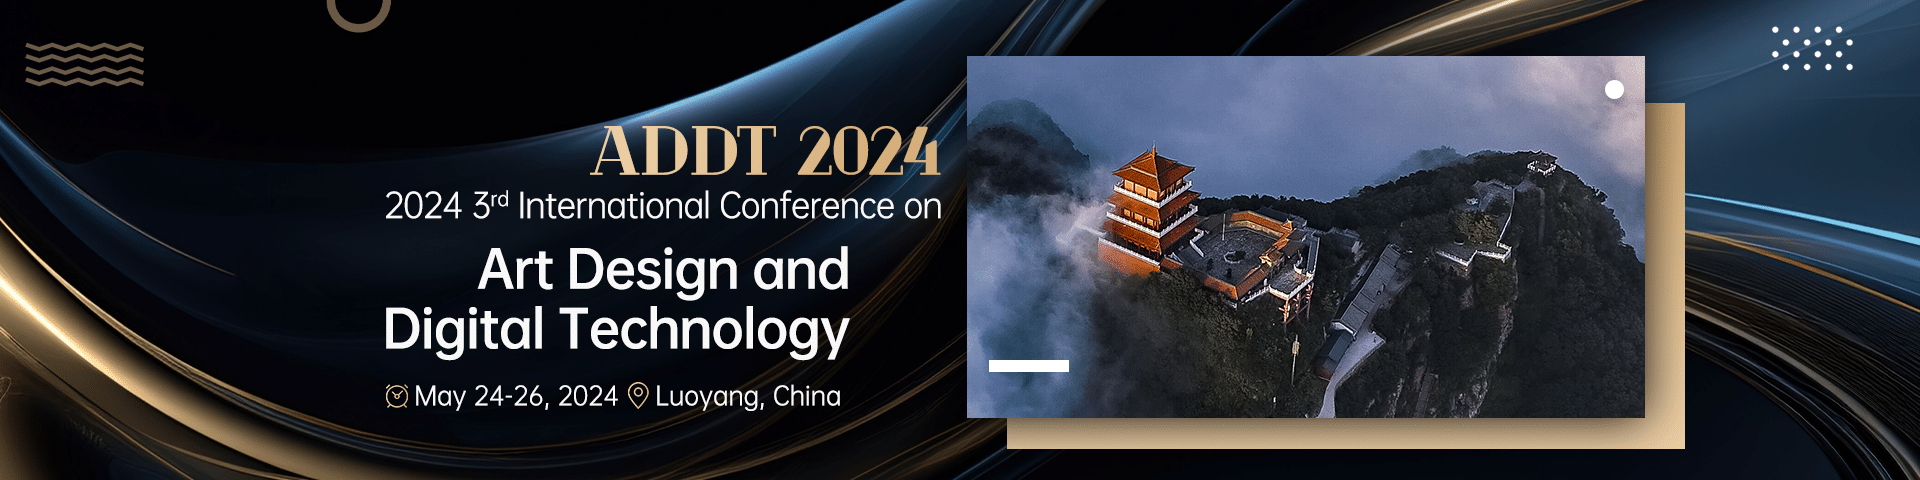 2024 3rd International Conference on Art Design and Digital Technology (ADDT 2024)